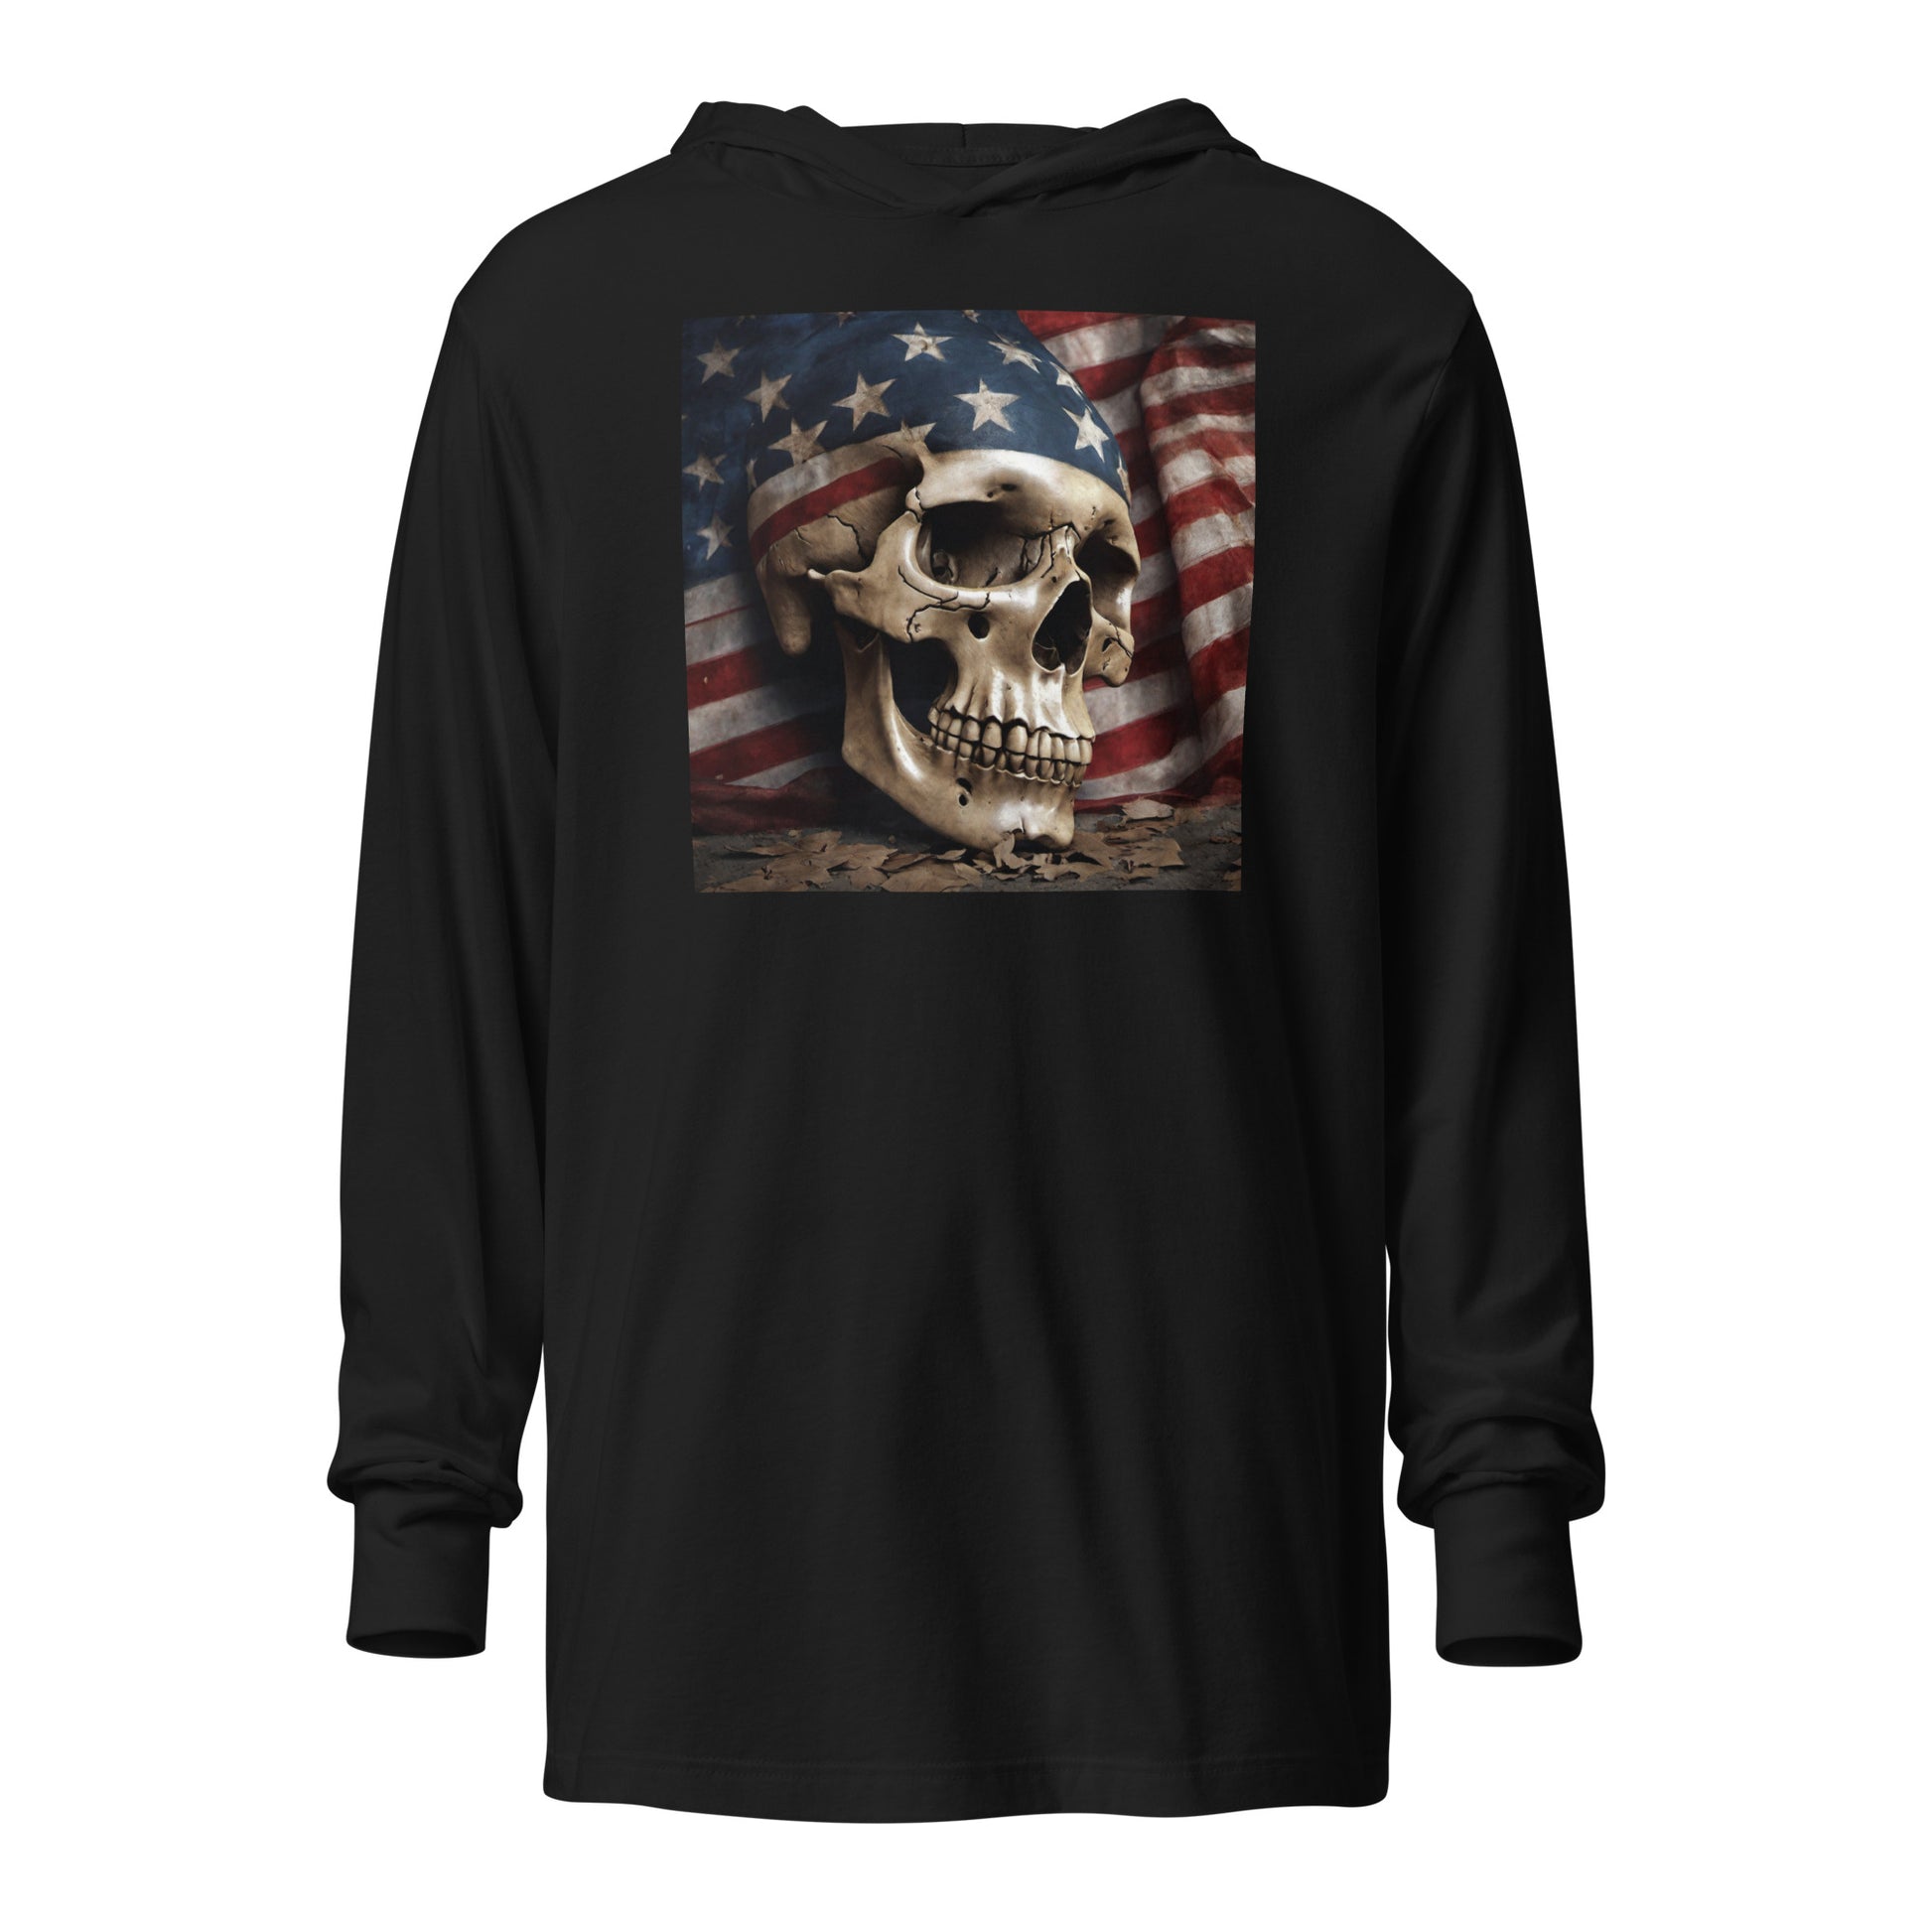 Skull and Flag Print Hooded Long-sleeve Tee Black